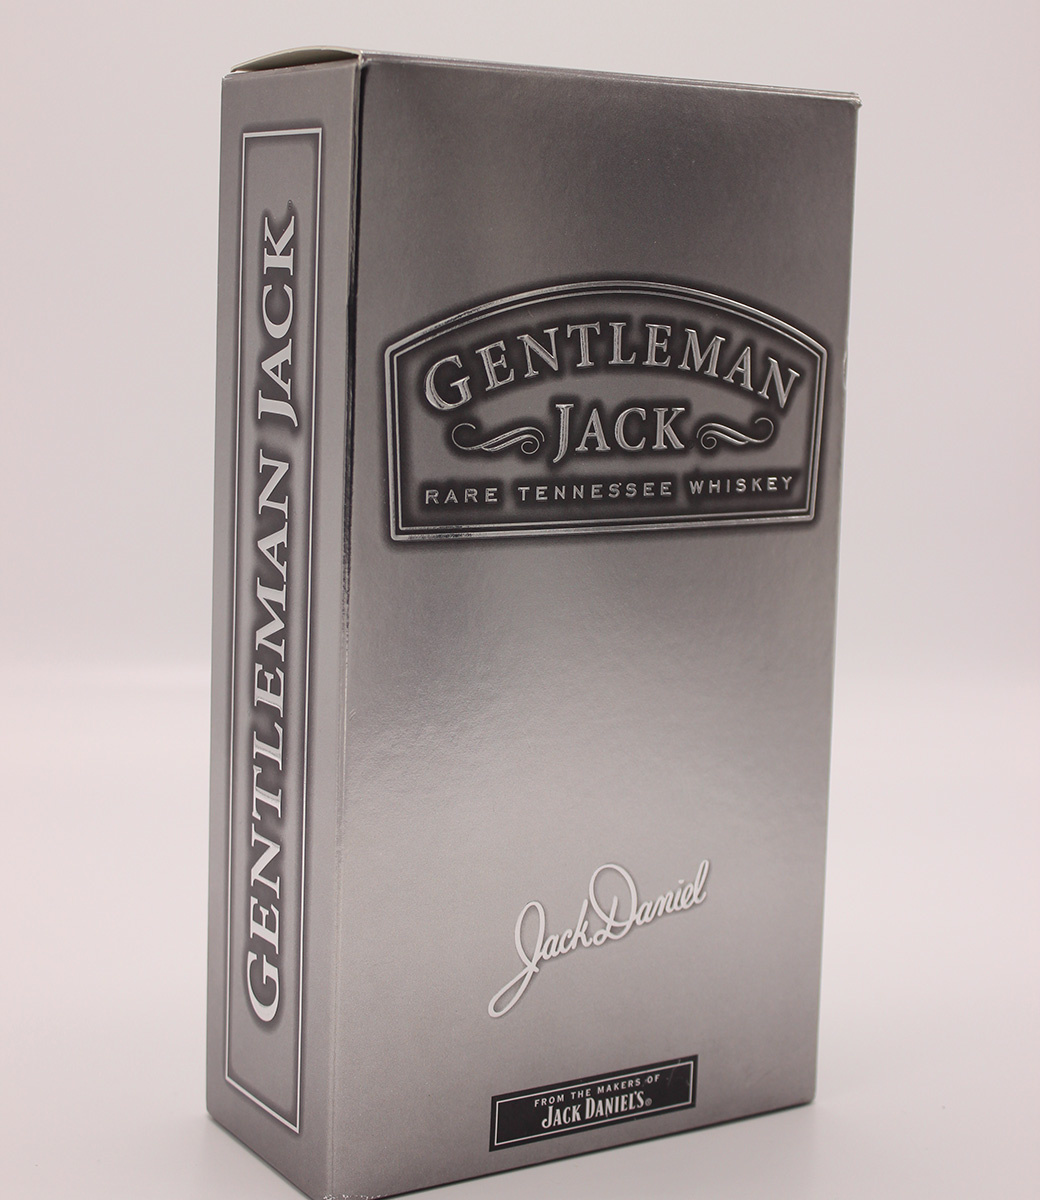 JACK DANIEL'S - Gentleman Jack - Silver - Box only